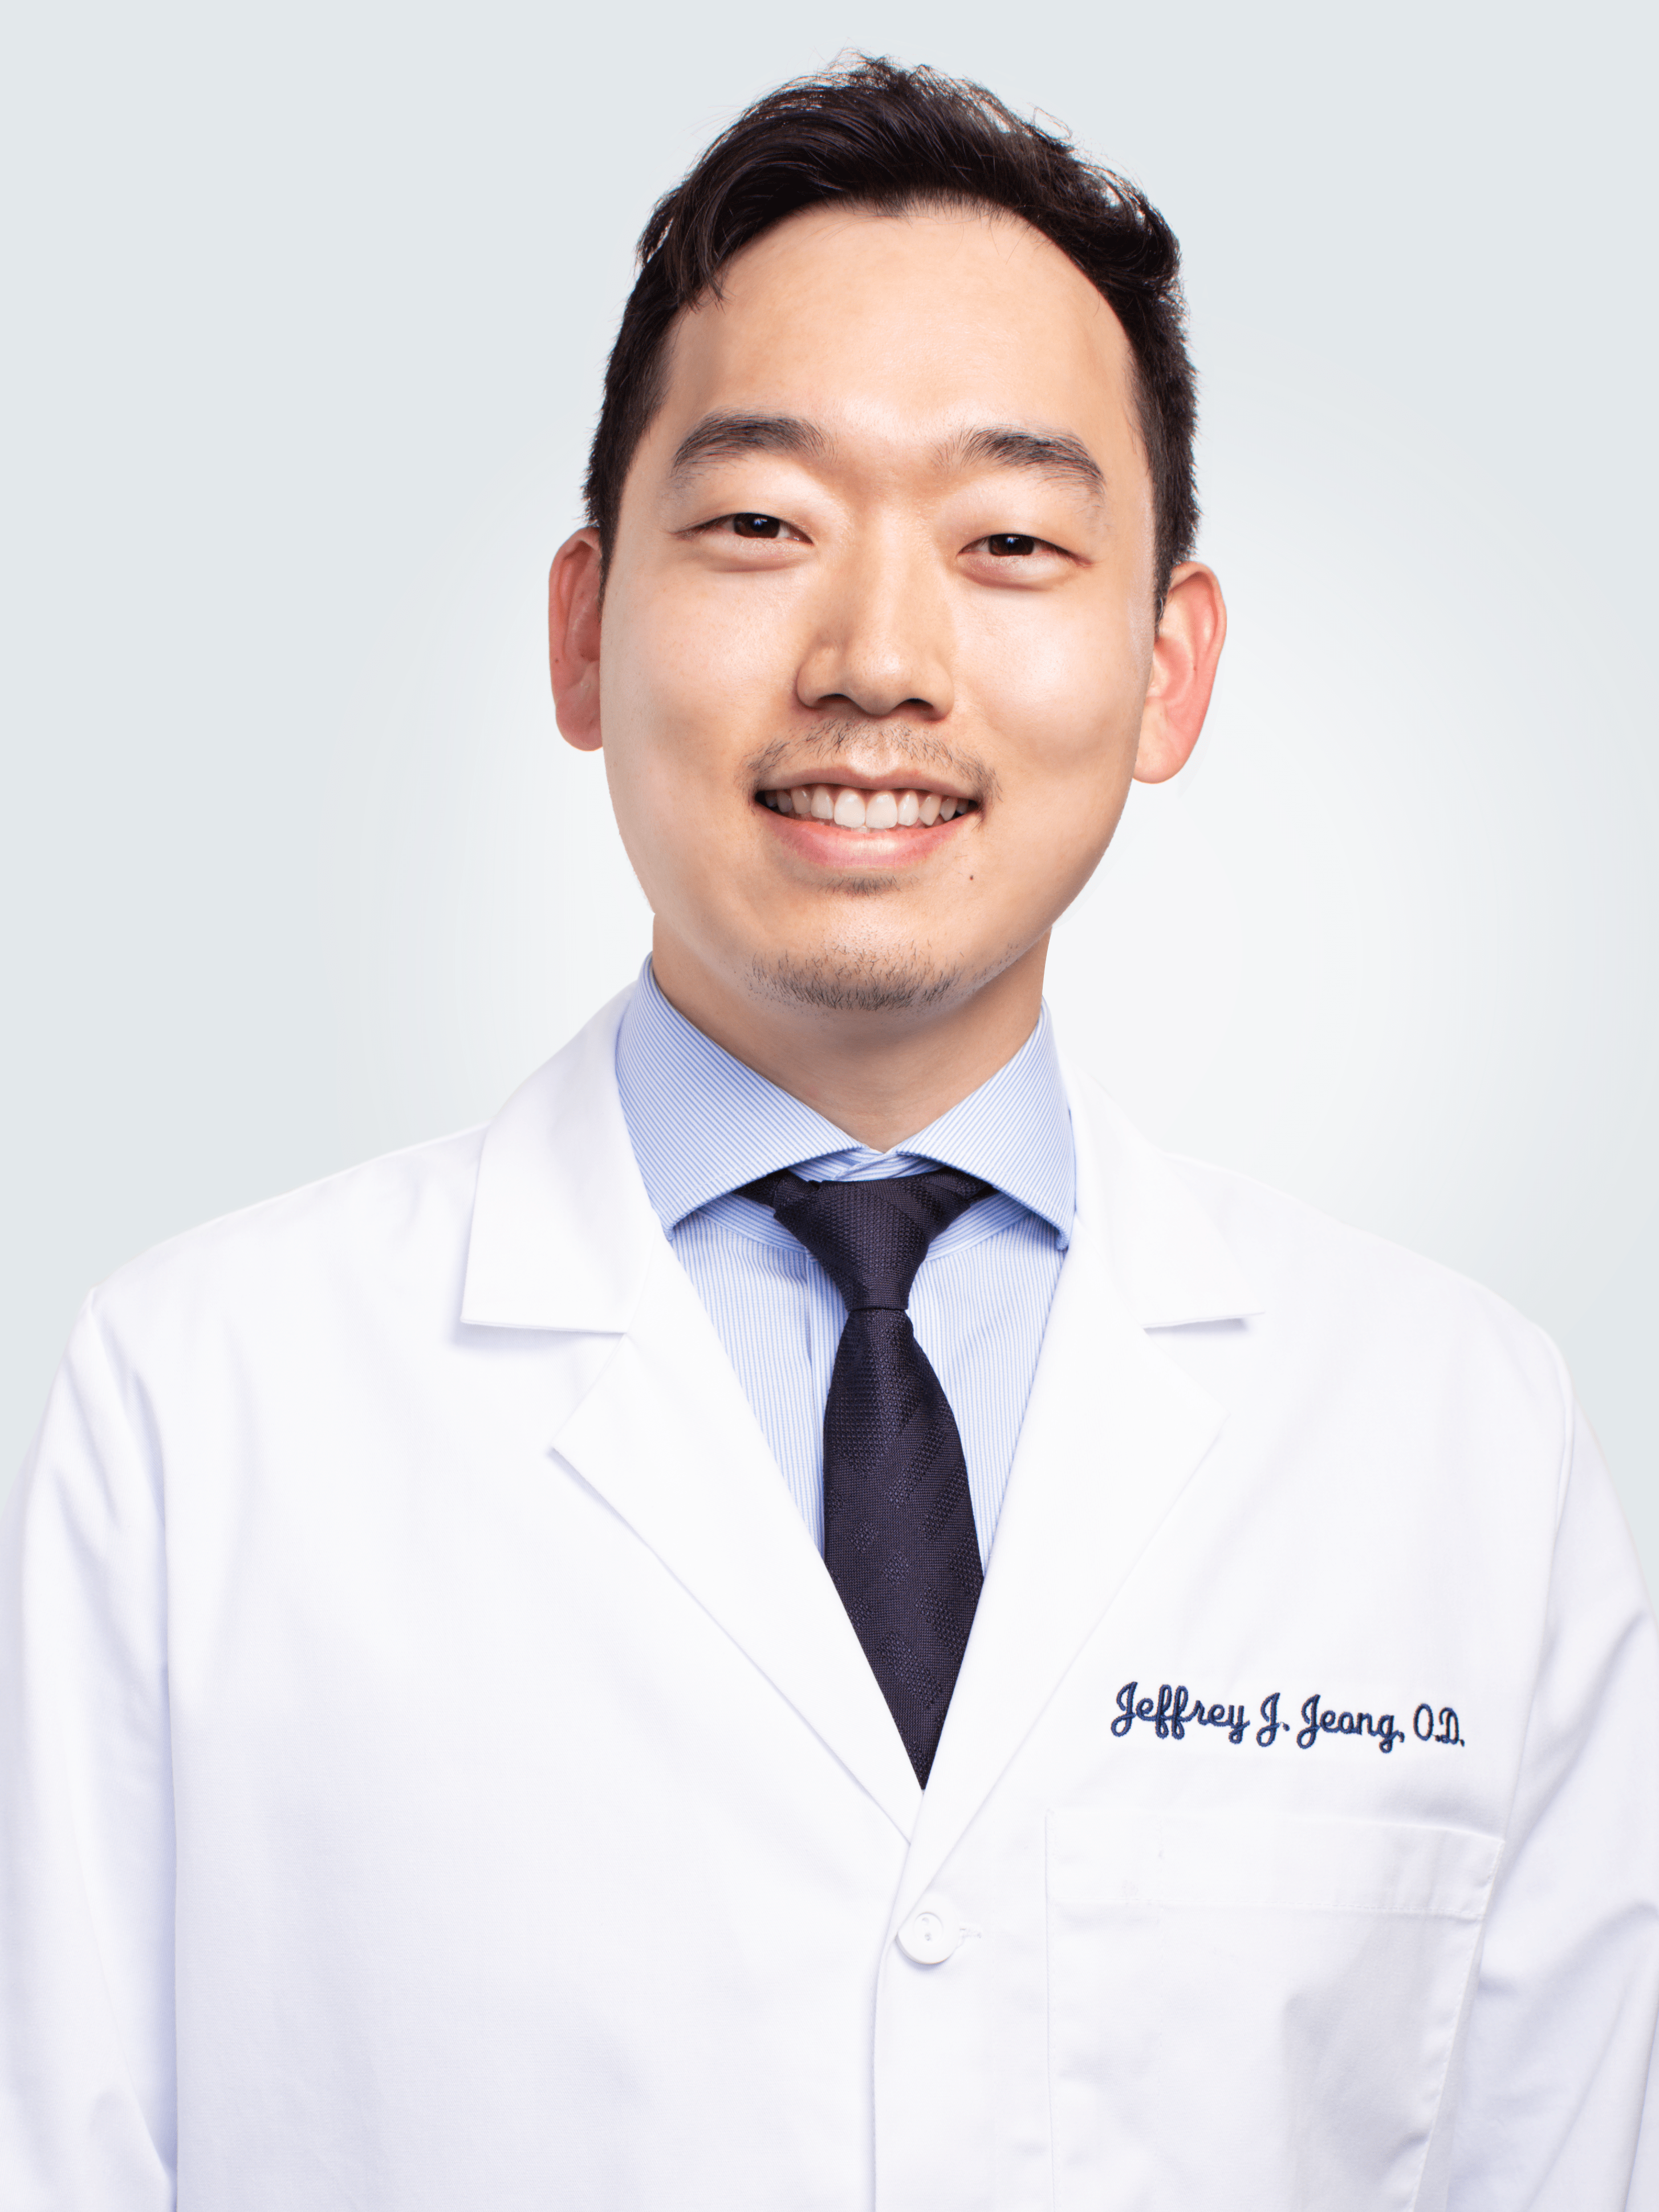 Dr. Jeffrey Jeong OD